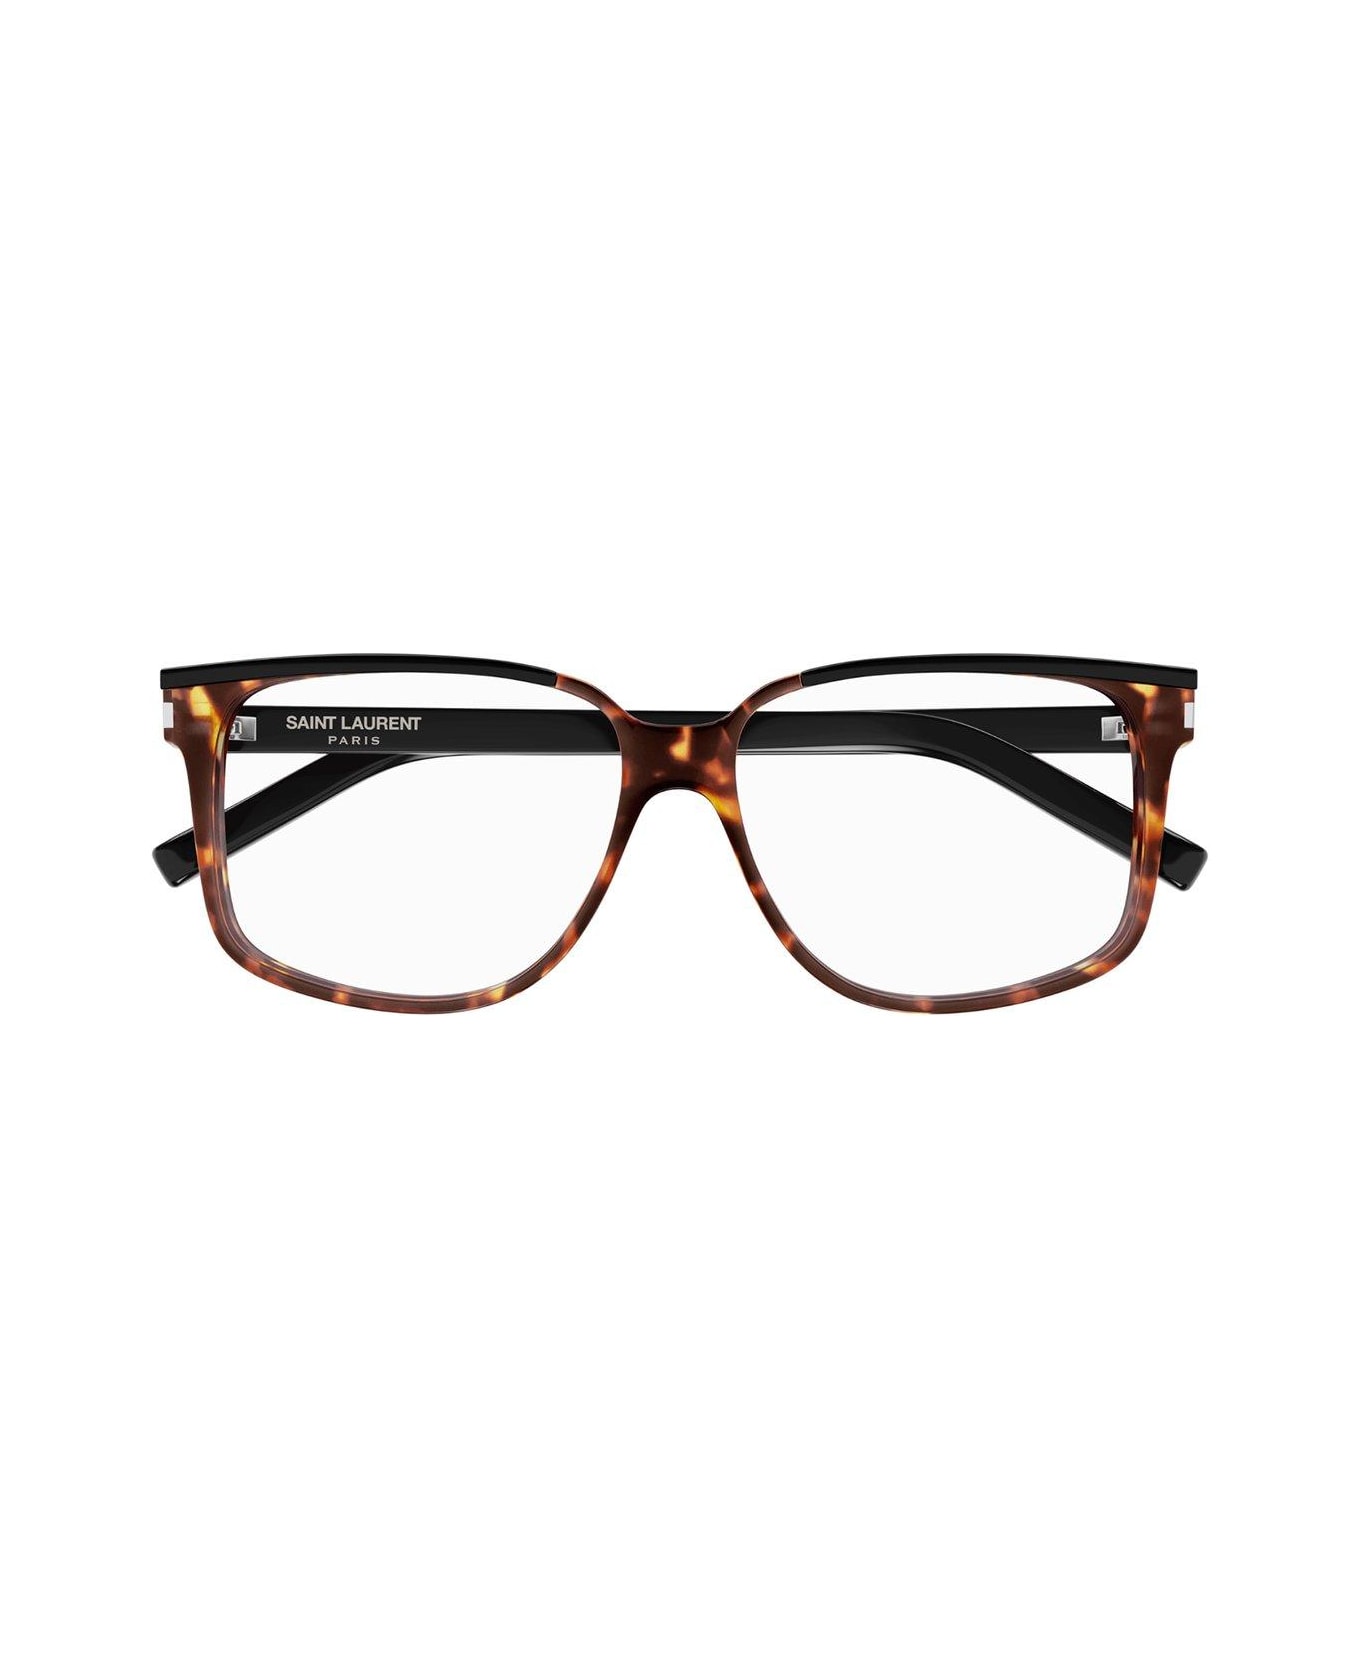 Saint Laurent Eyewear Square Frame Glasses - 001 black black transpare